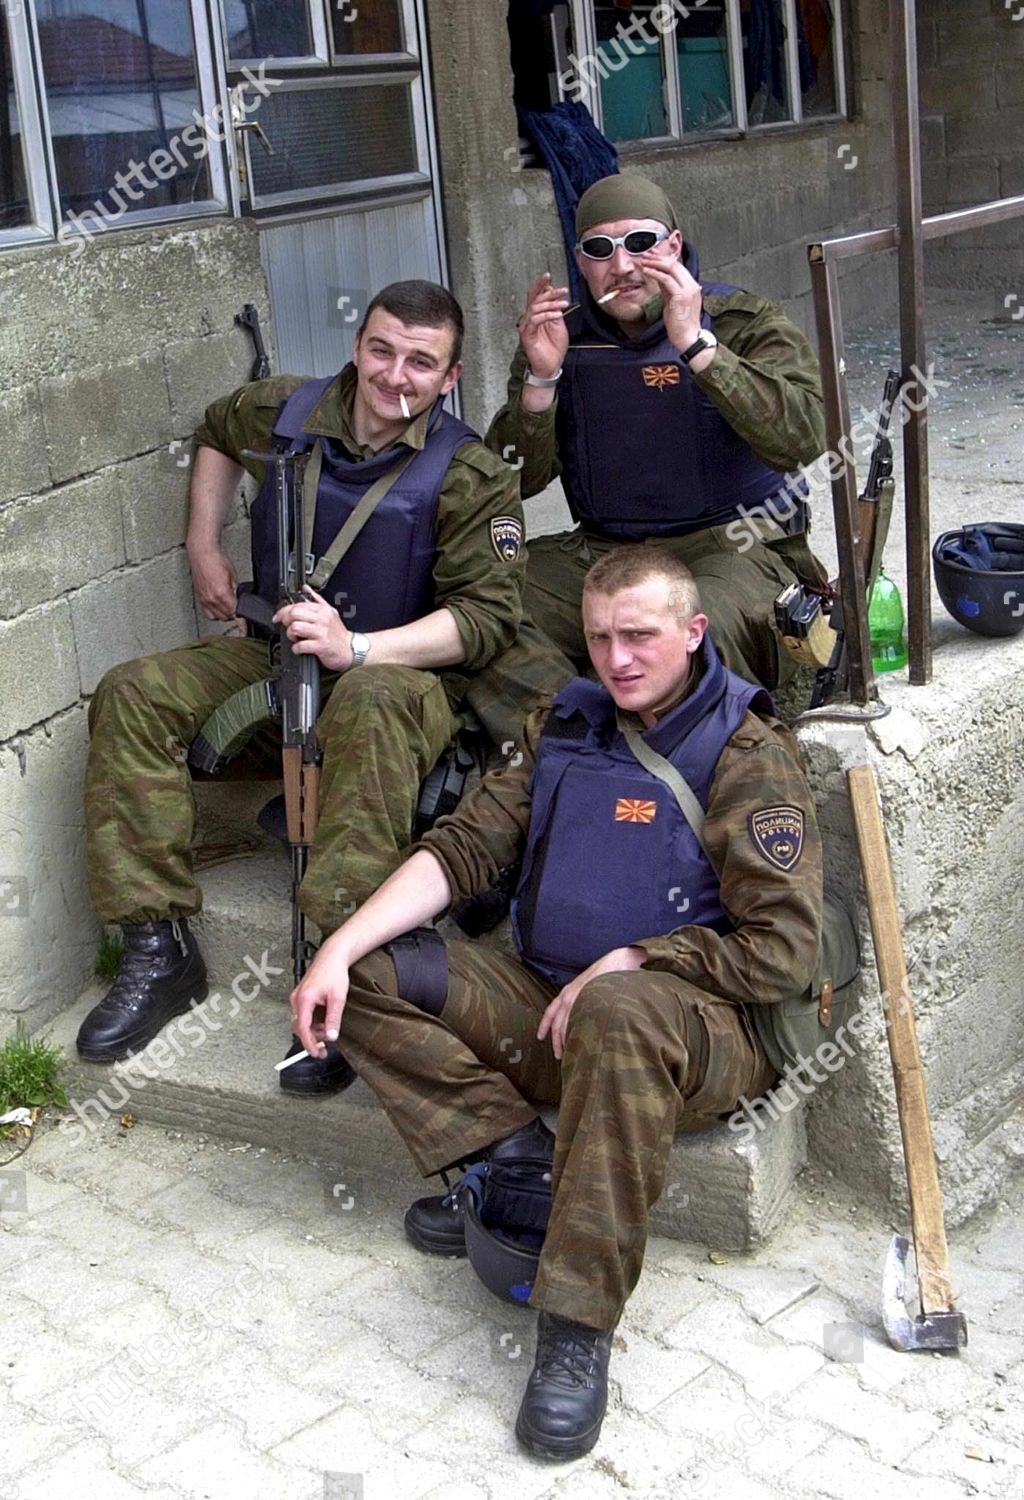 macedonia-policemen-mar-2001-shutterstock-editorial-8482164a.jpg